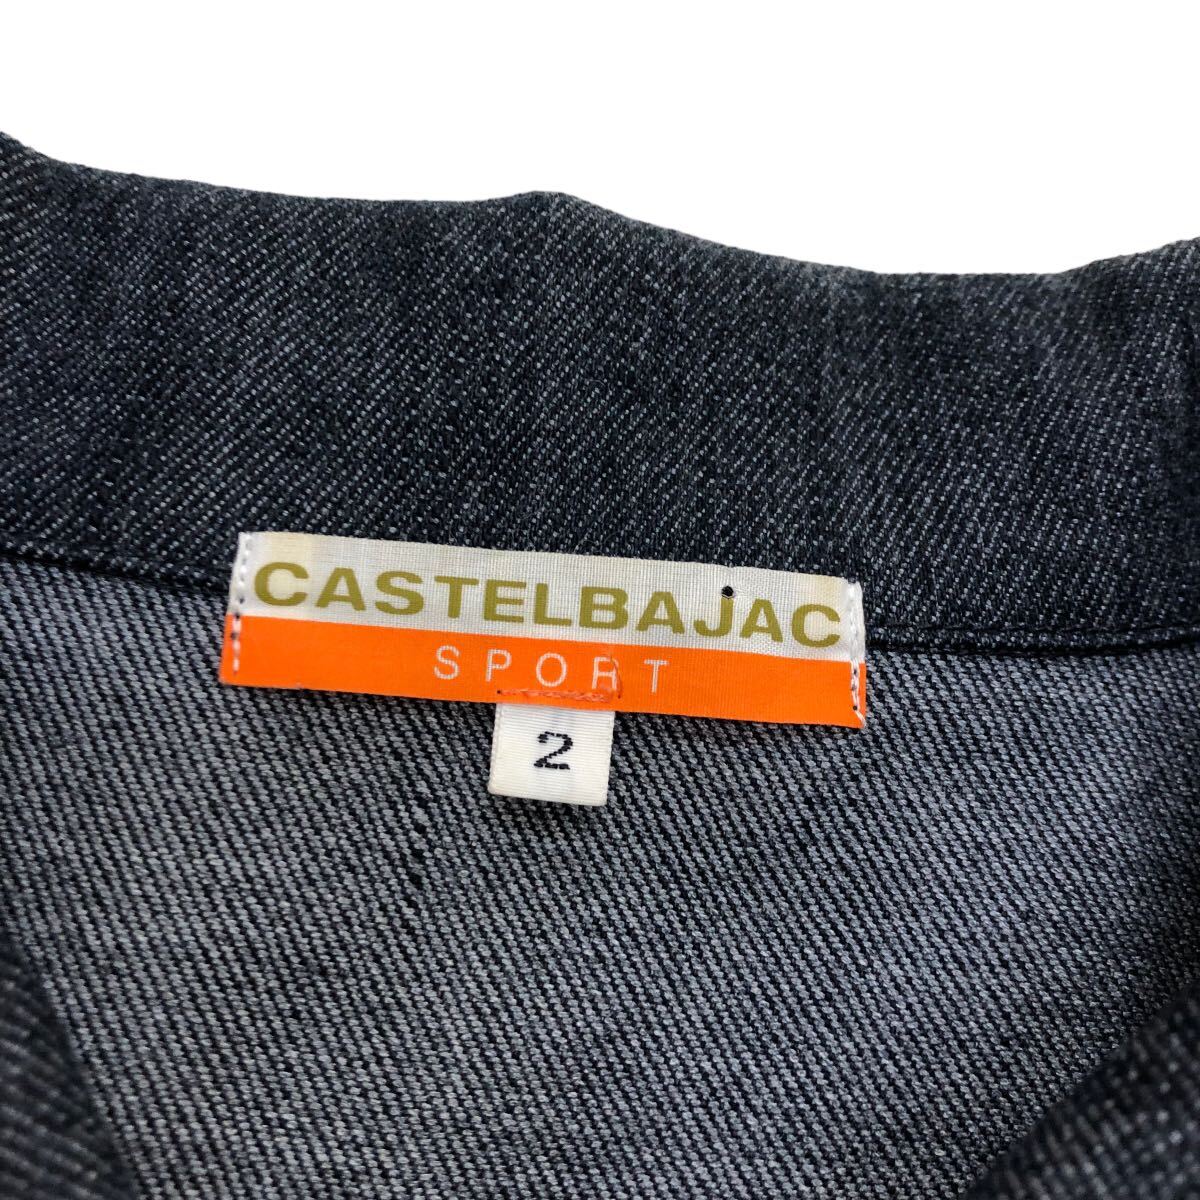 S192 CASTELBAJAC SPORTS Castelbajac jacket Denim jacket outer garment unusual material knitted Denim cotton wool 2 navy navy blue gray 